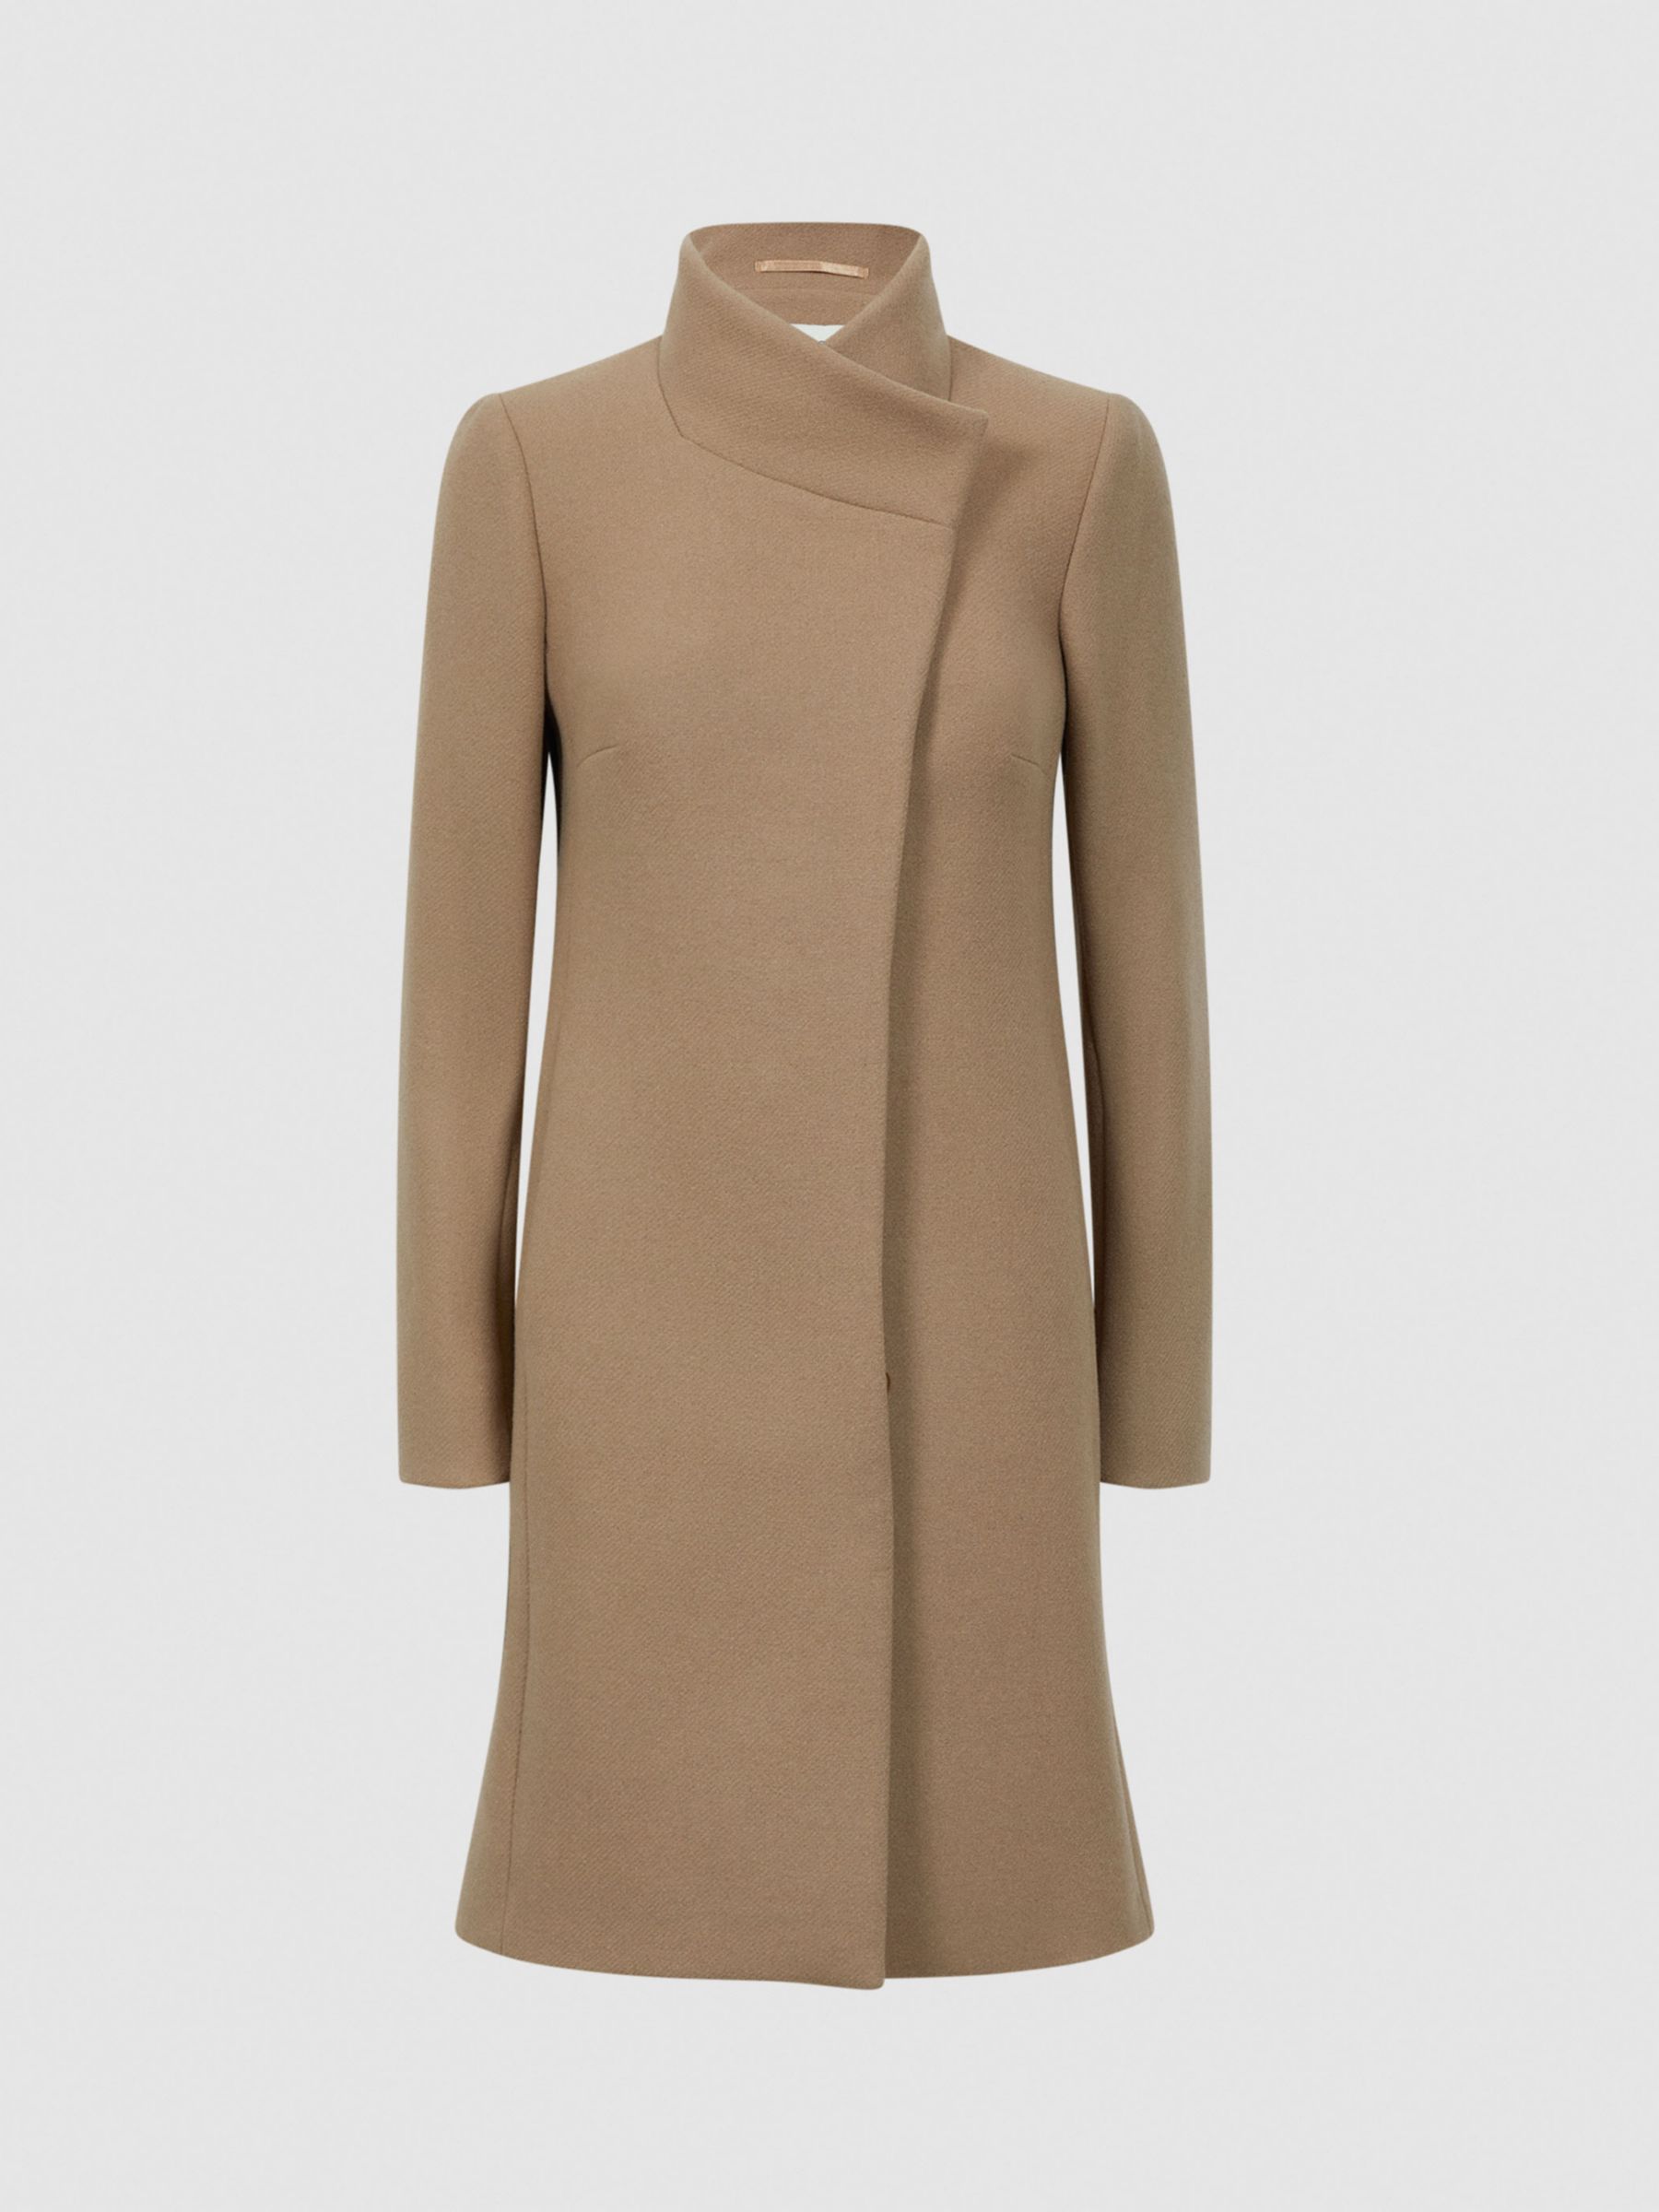 Buy Reiss Petite Mia Wool Blend Tailored Coat Online at johnlewis.com